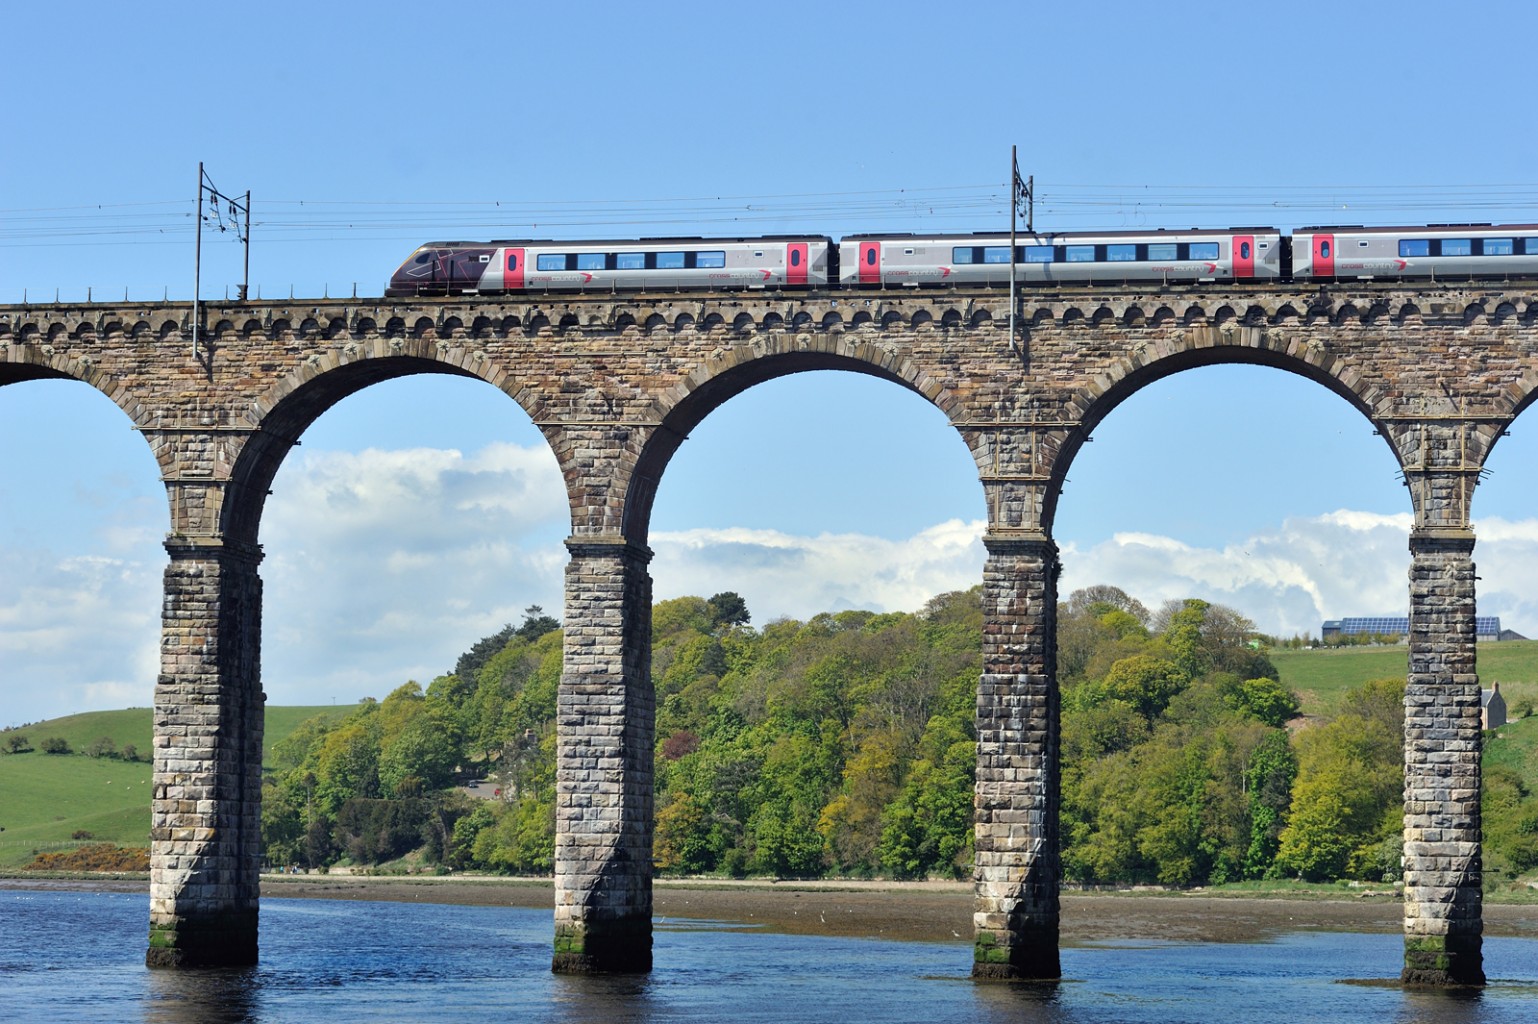 East Coast railway train crossing the Royal Border Bridge at Berwick Upon Tweed in Northumberland.